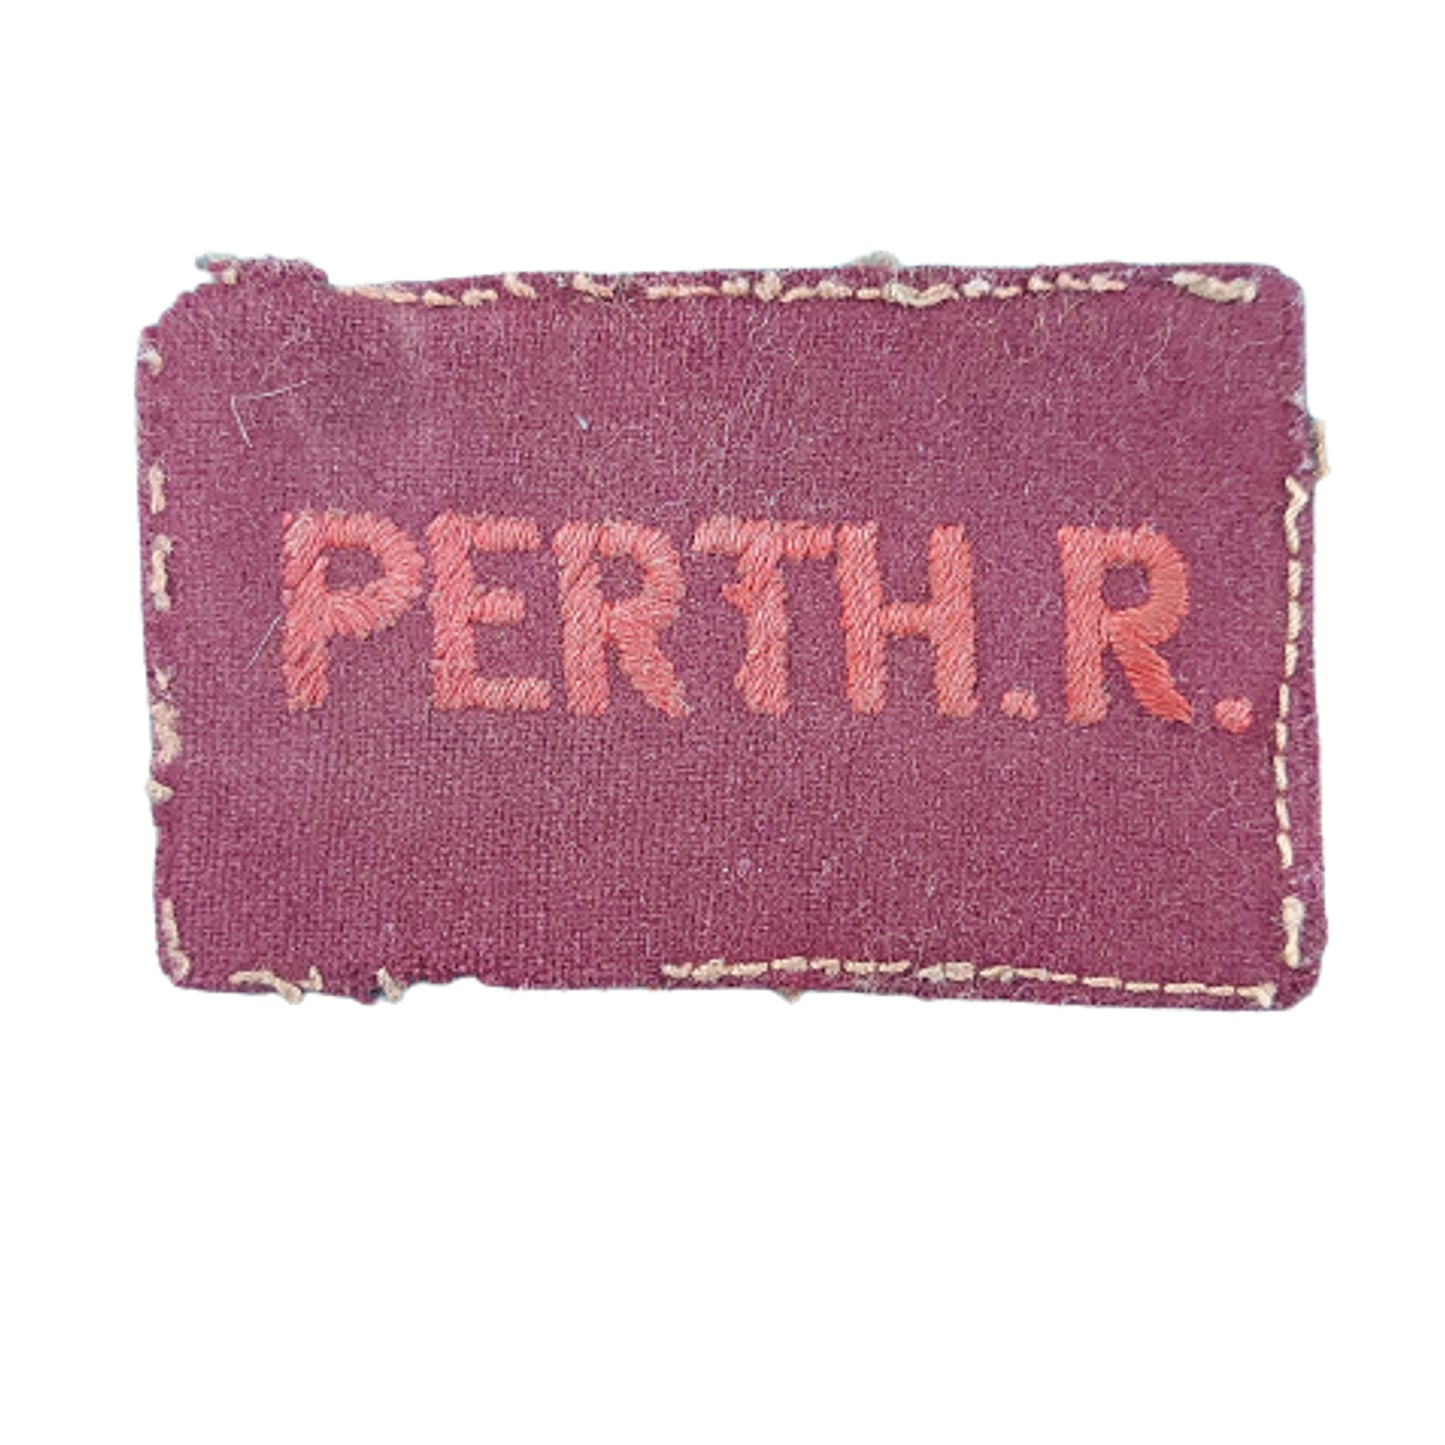 WW2 Canadian Perth Regiment Distinguishing Patch (Number 1)